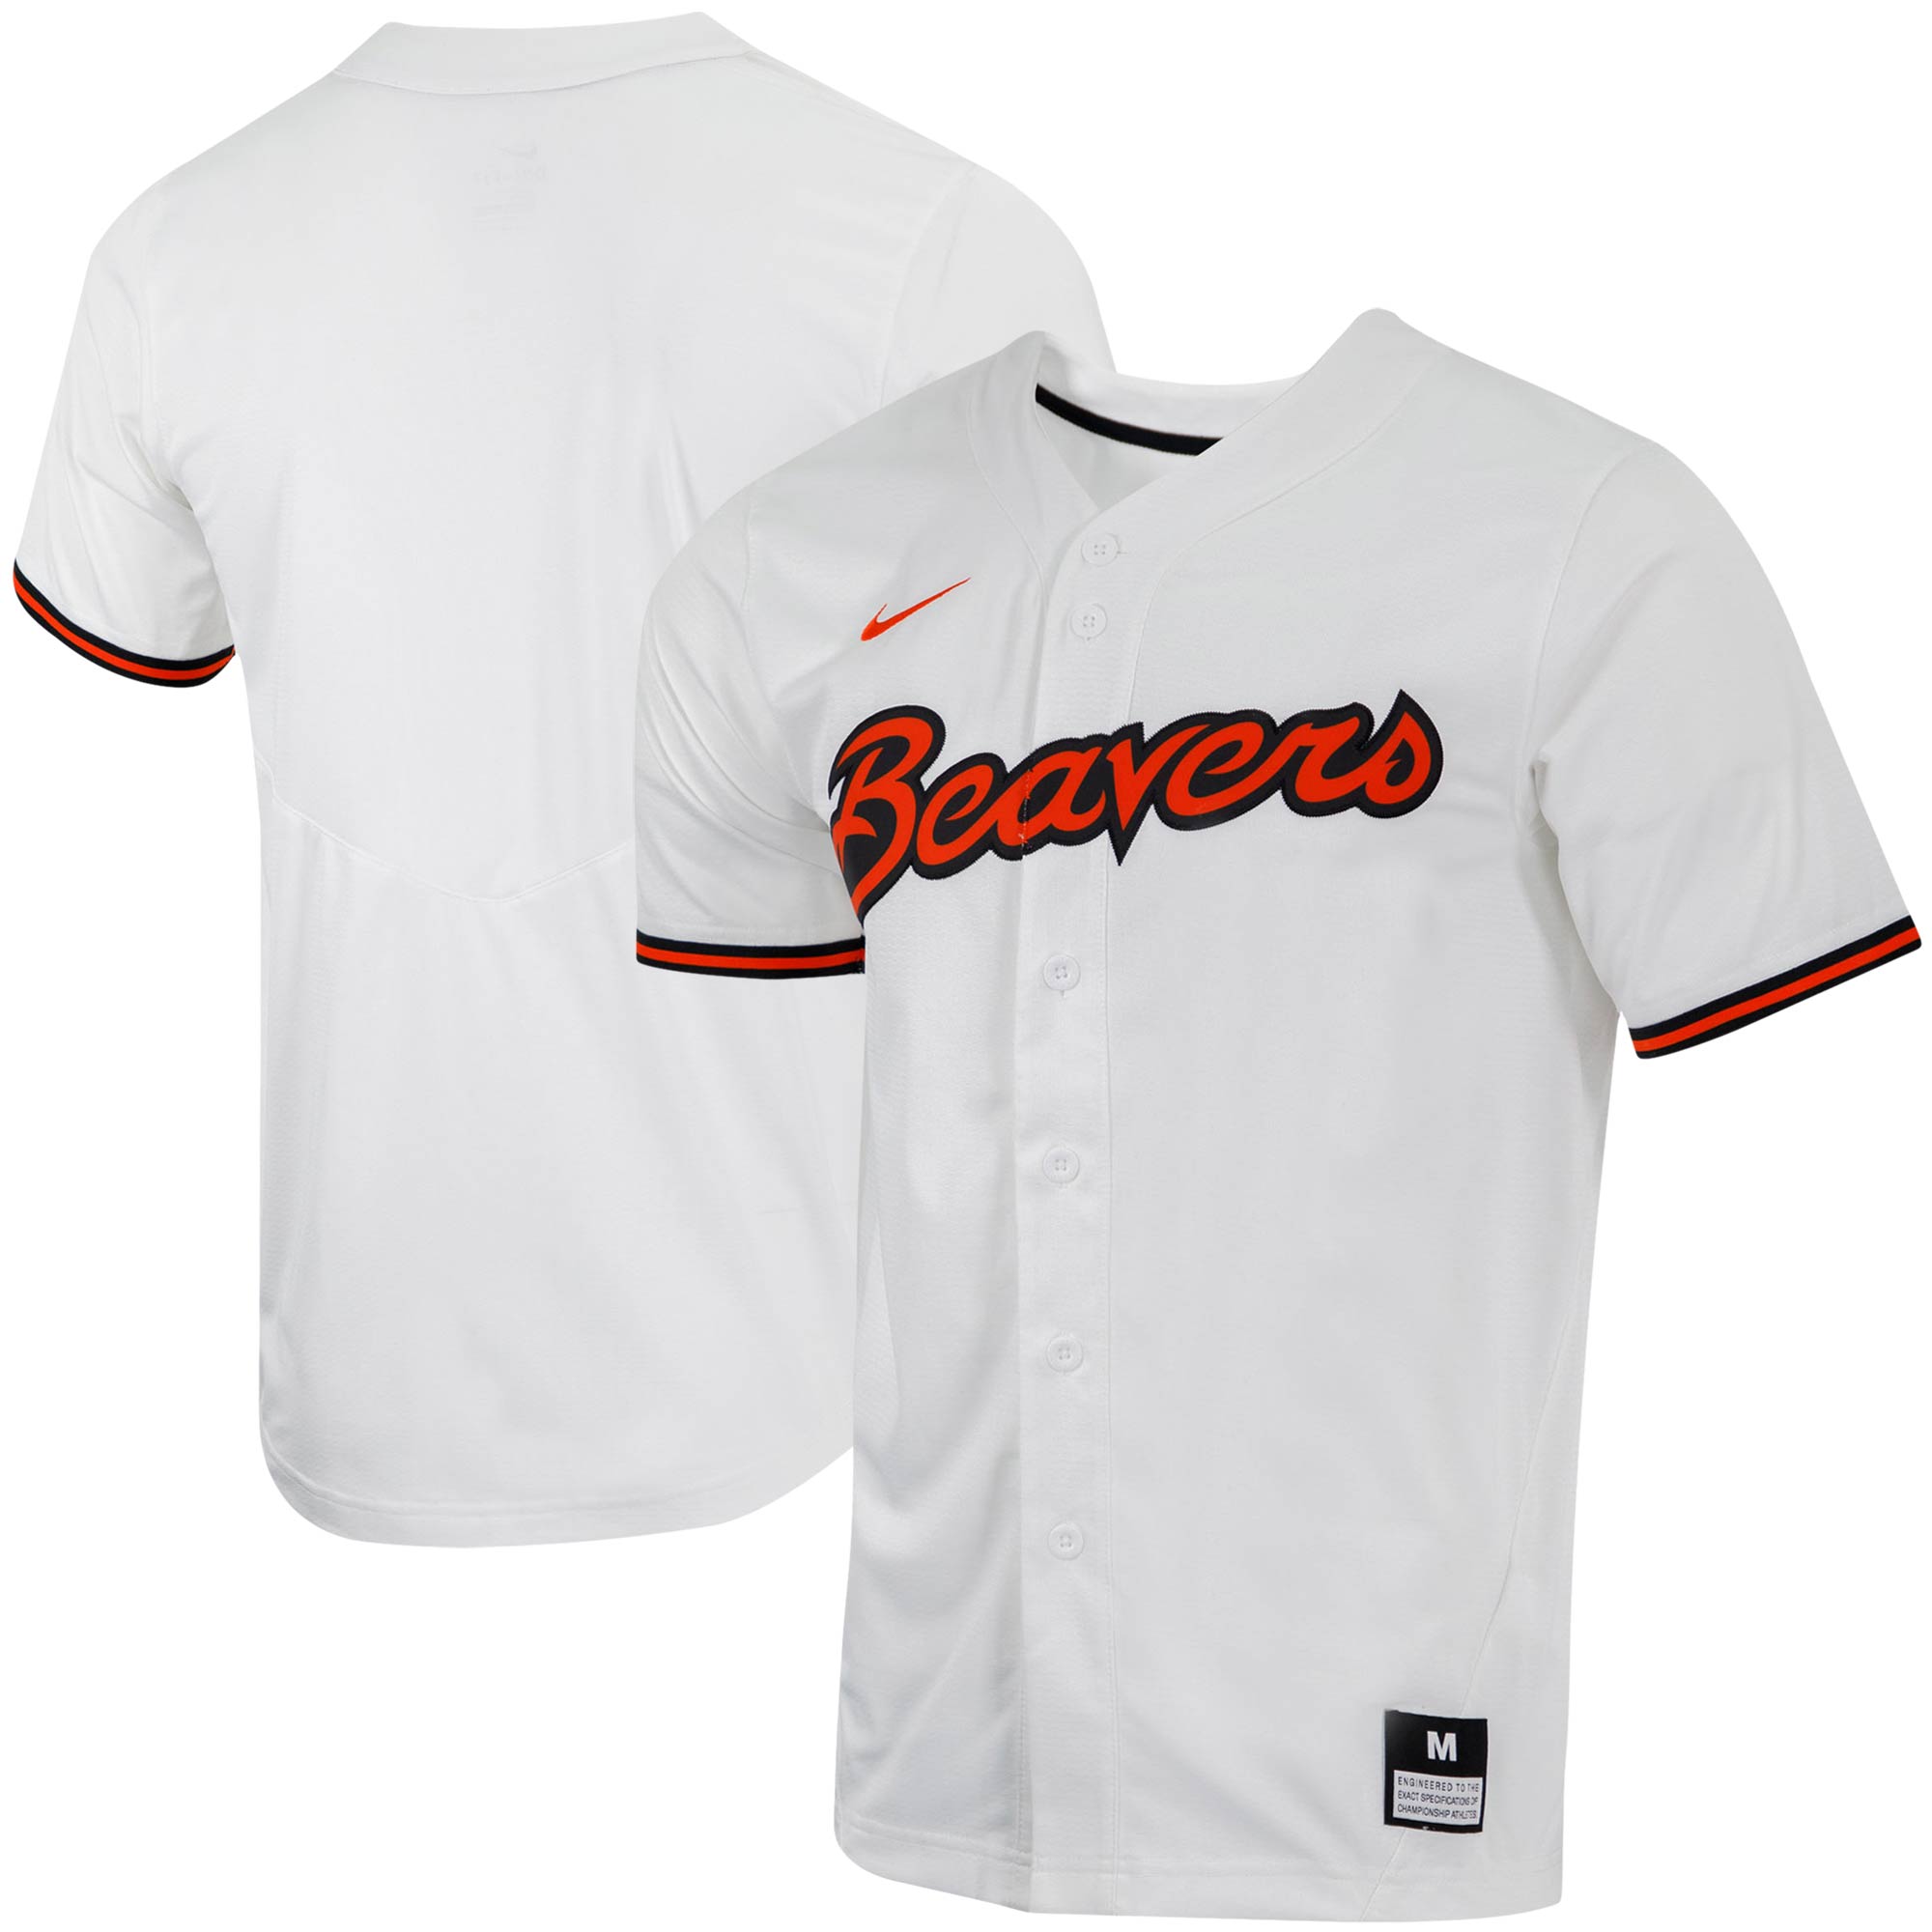 Oregon State Beavers Replica Full-Button Baseball Jersey - White For Youth Women Men